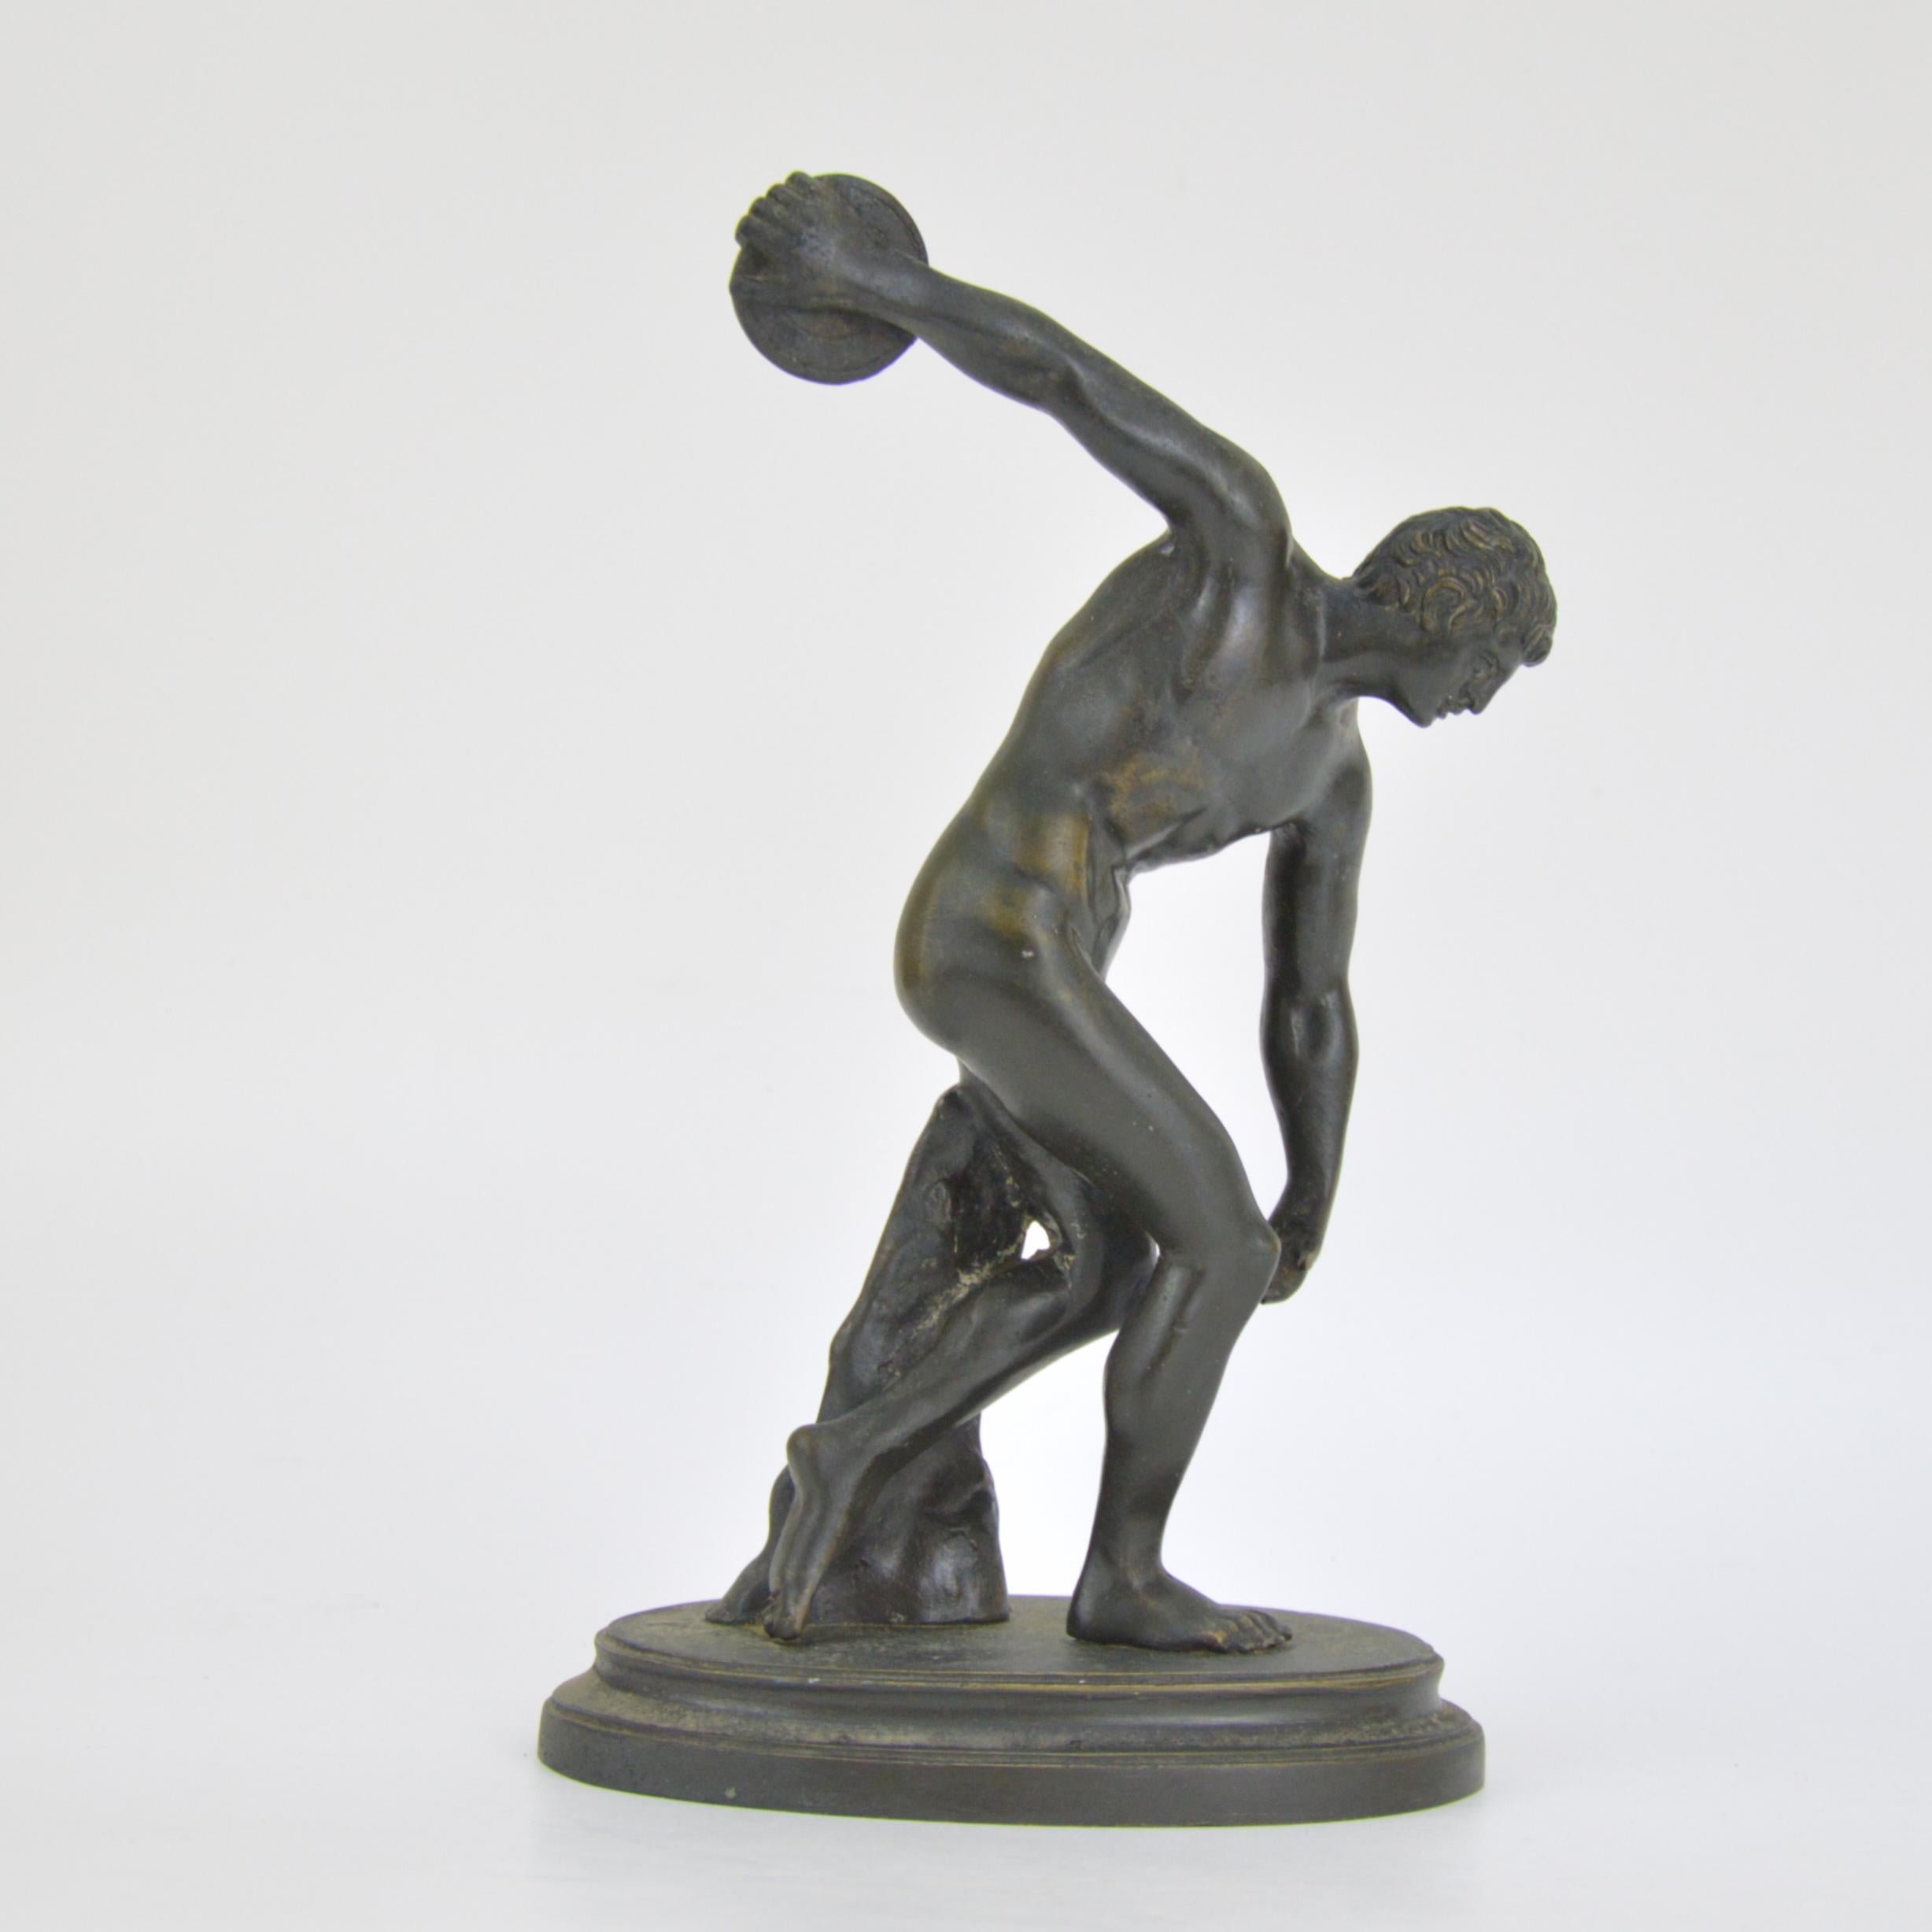 Antique patinated bronze sculpture representing diskobolos
Measures: Height - 26.5 cm.